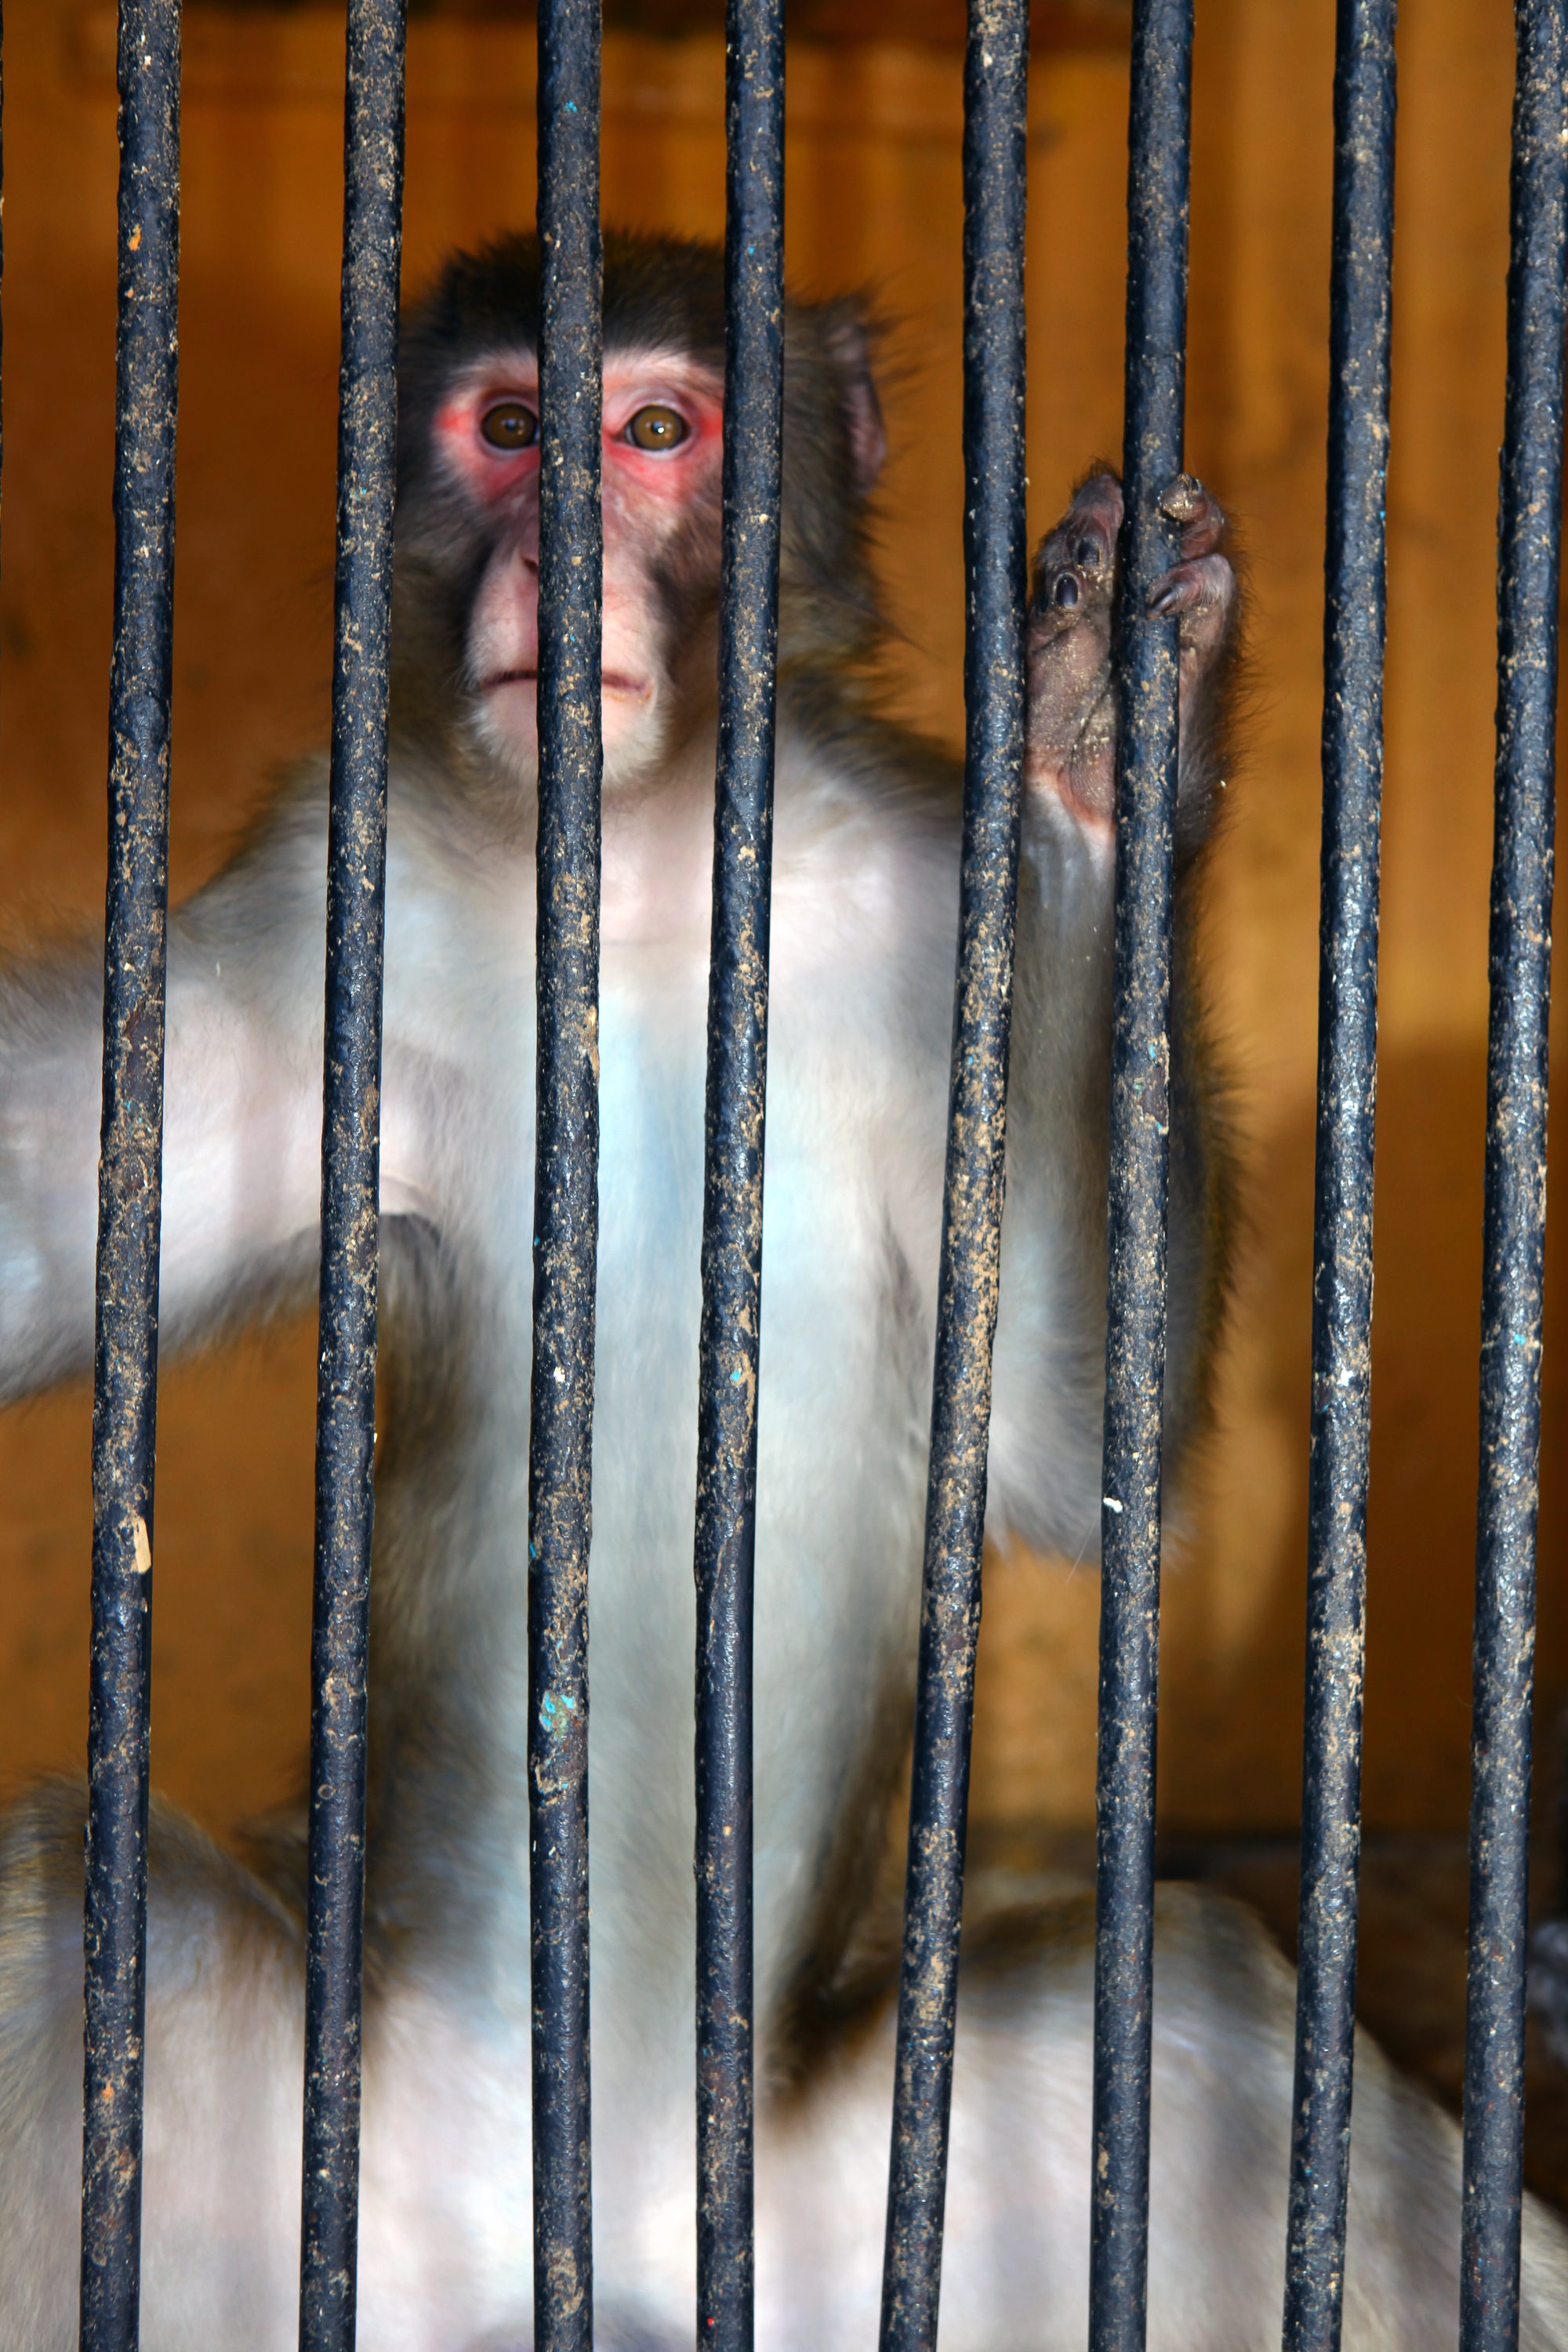 Monkey behind bars photo